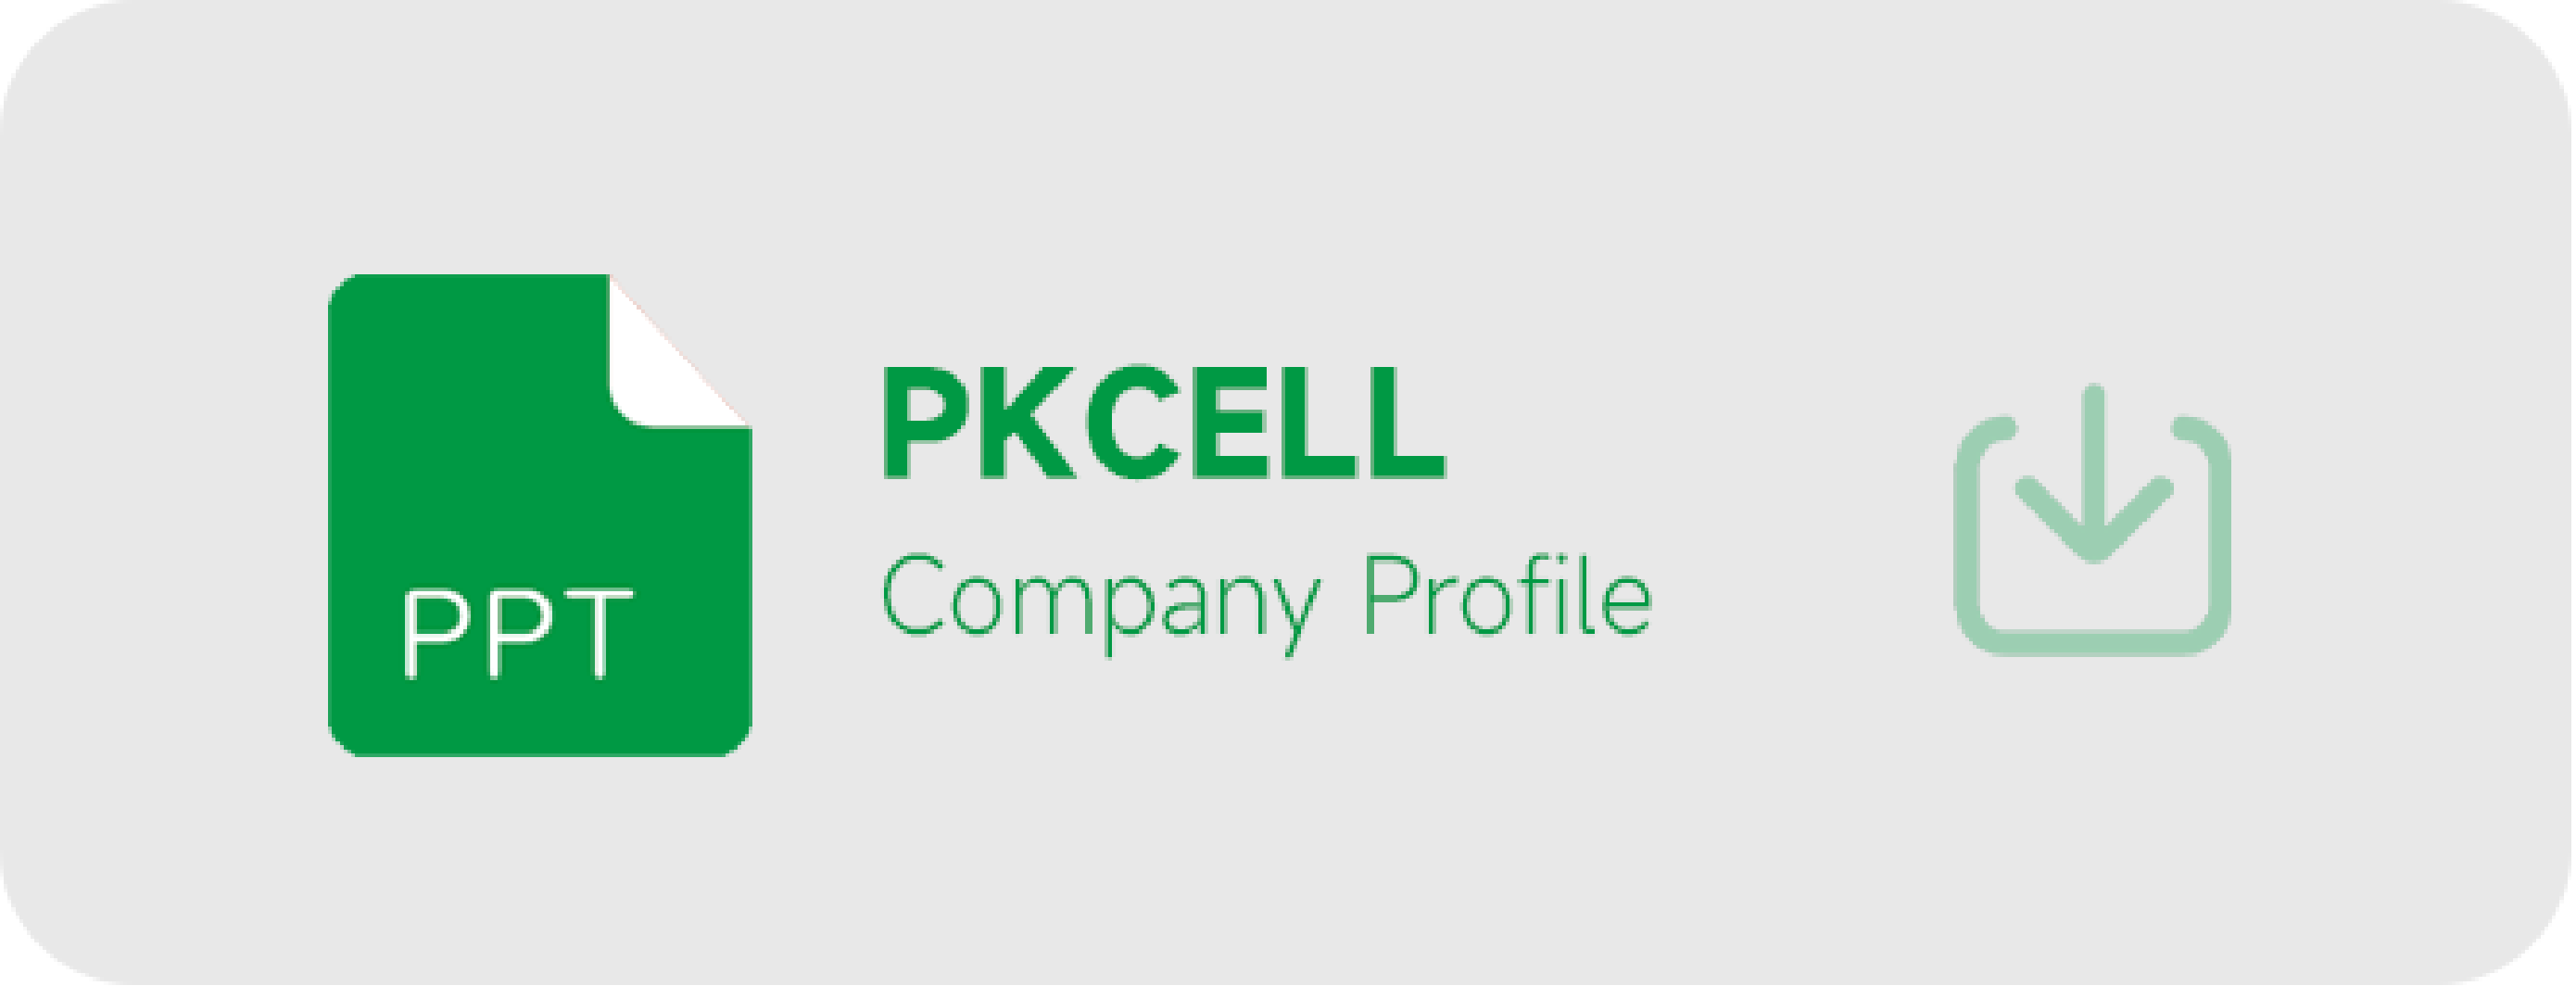 pkcell company profile